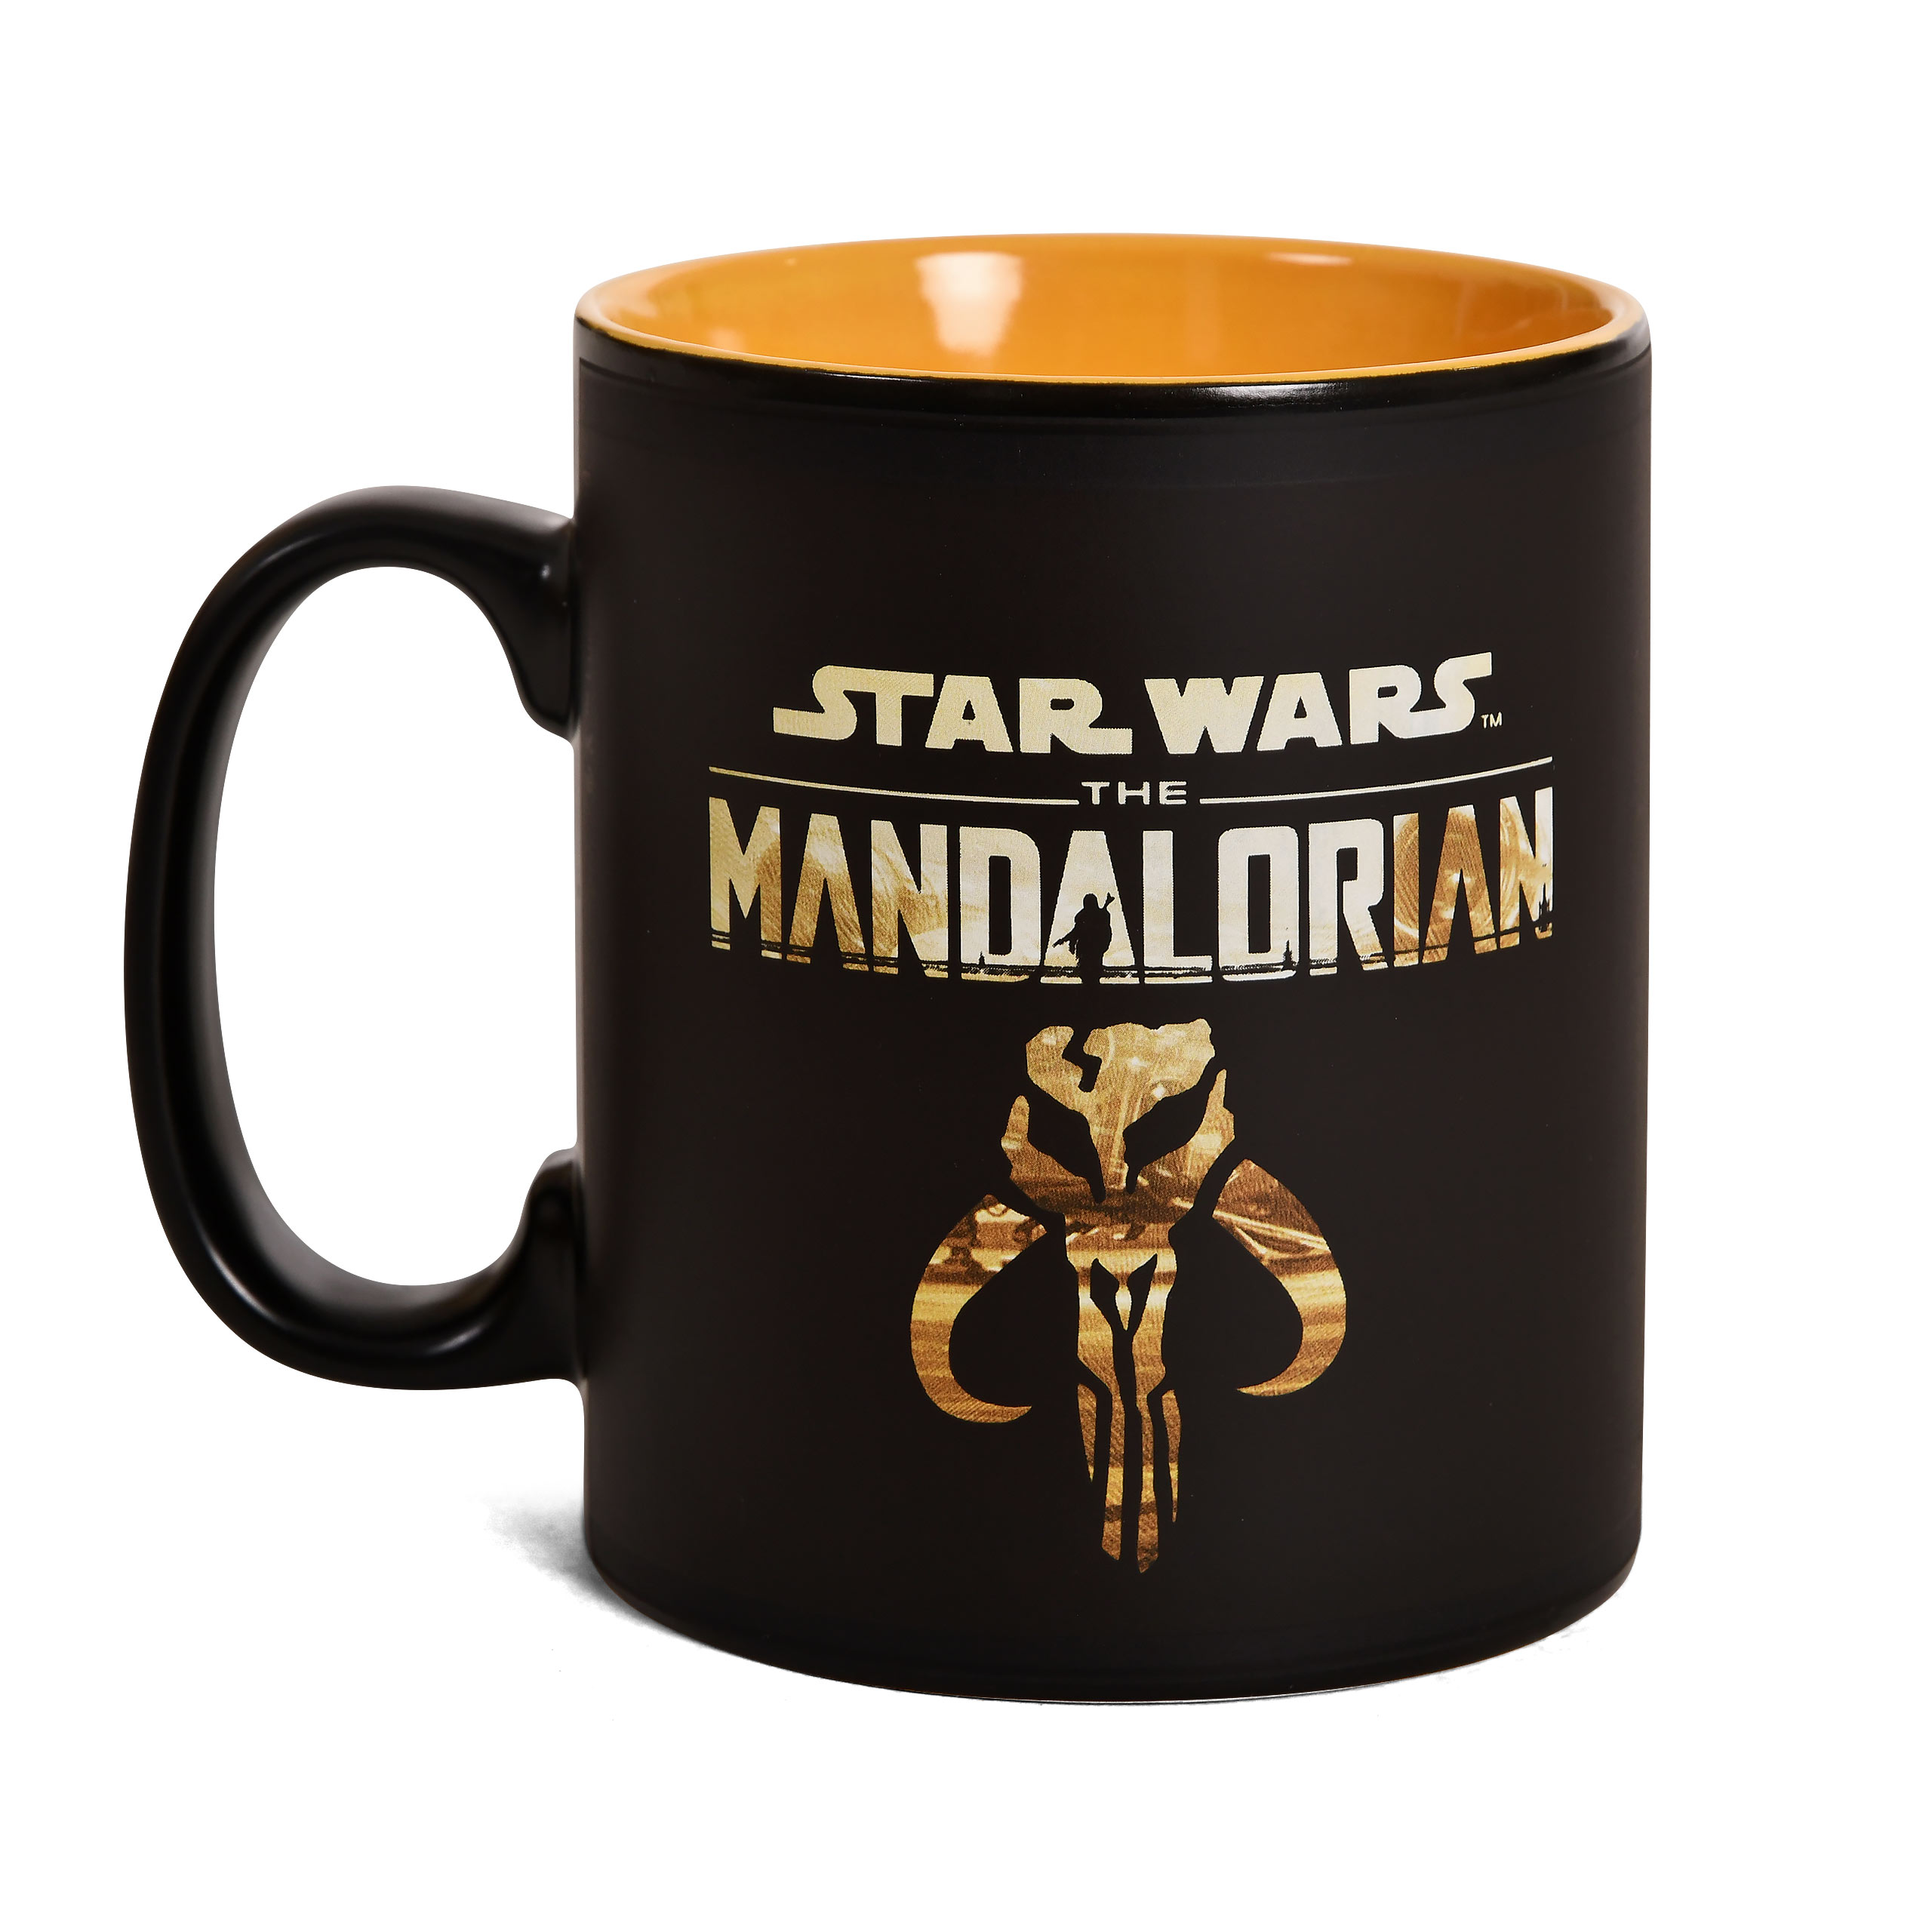 Mando mit Grogu Thermoeffekt Tasse - Star Wars The Mandalorian